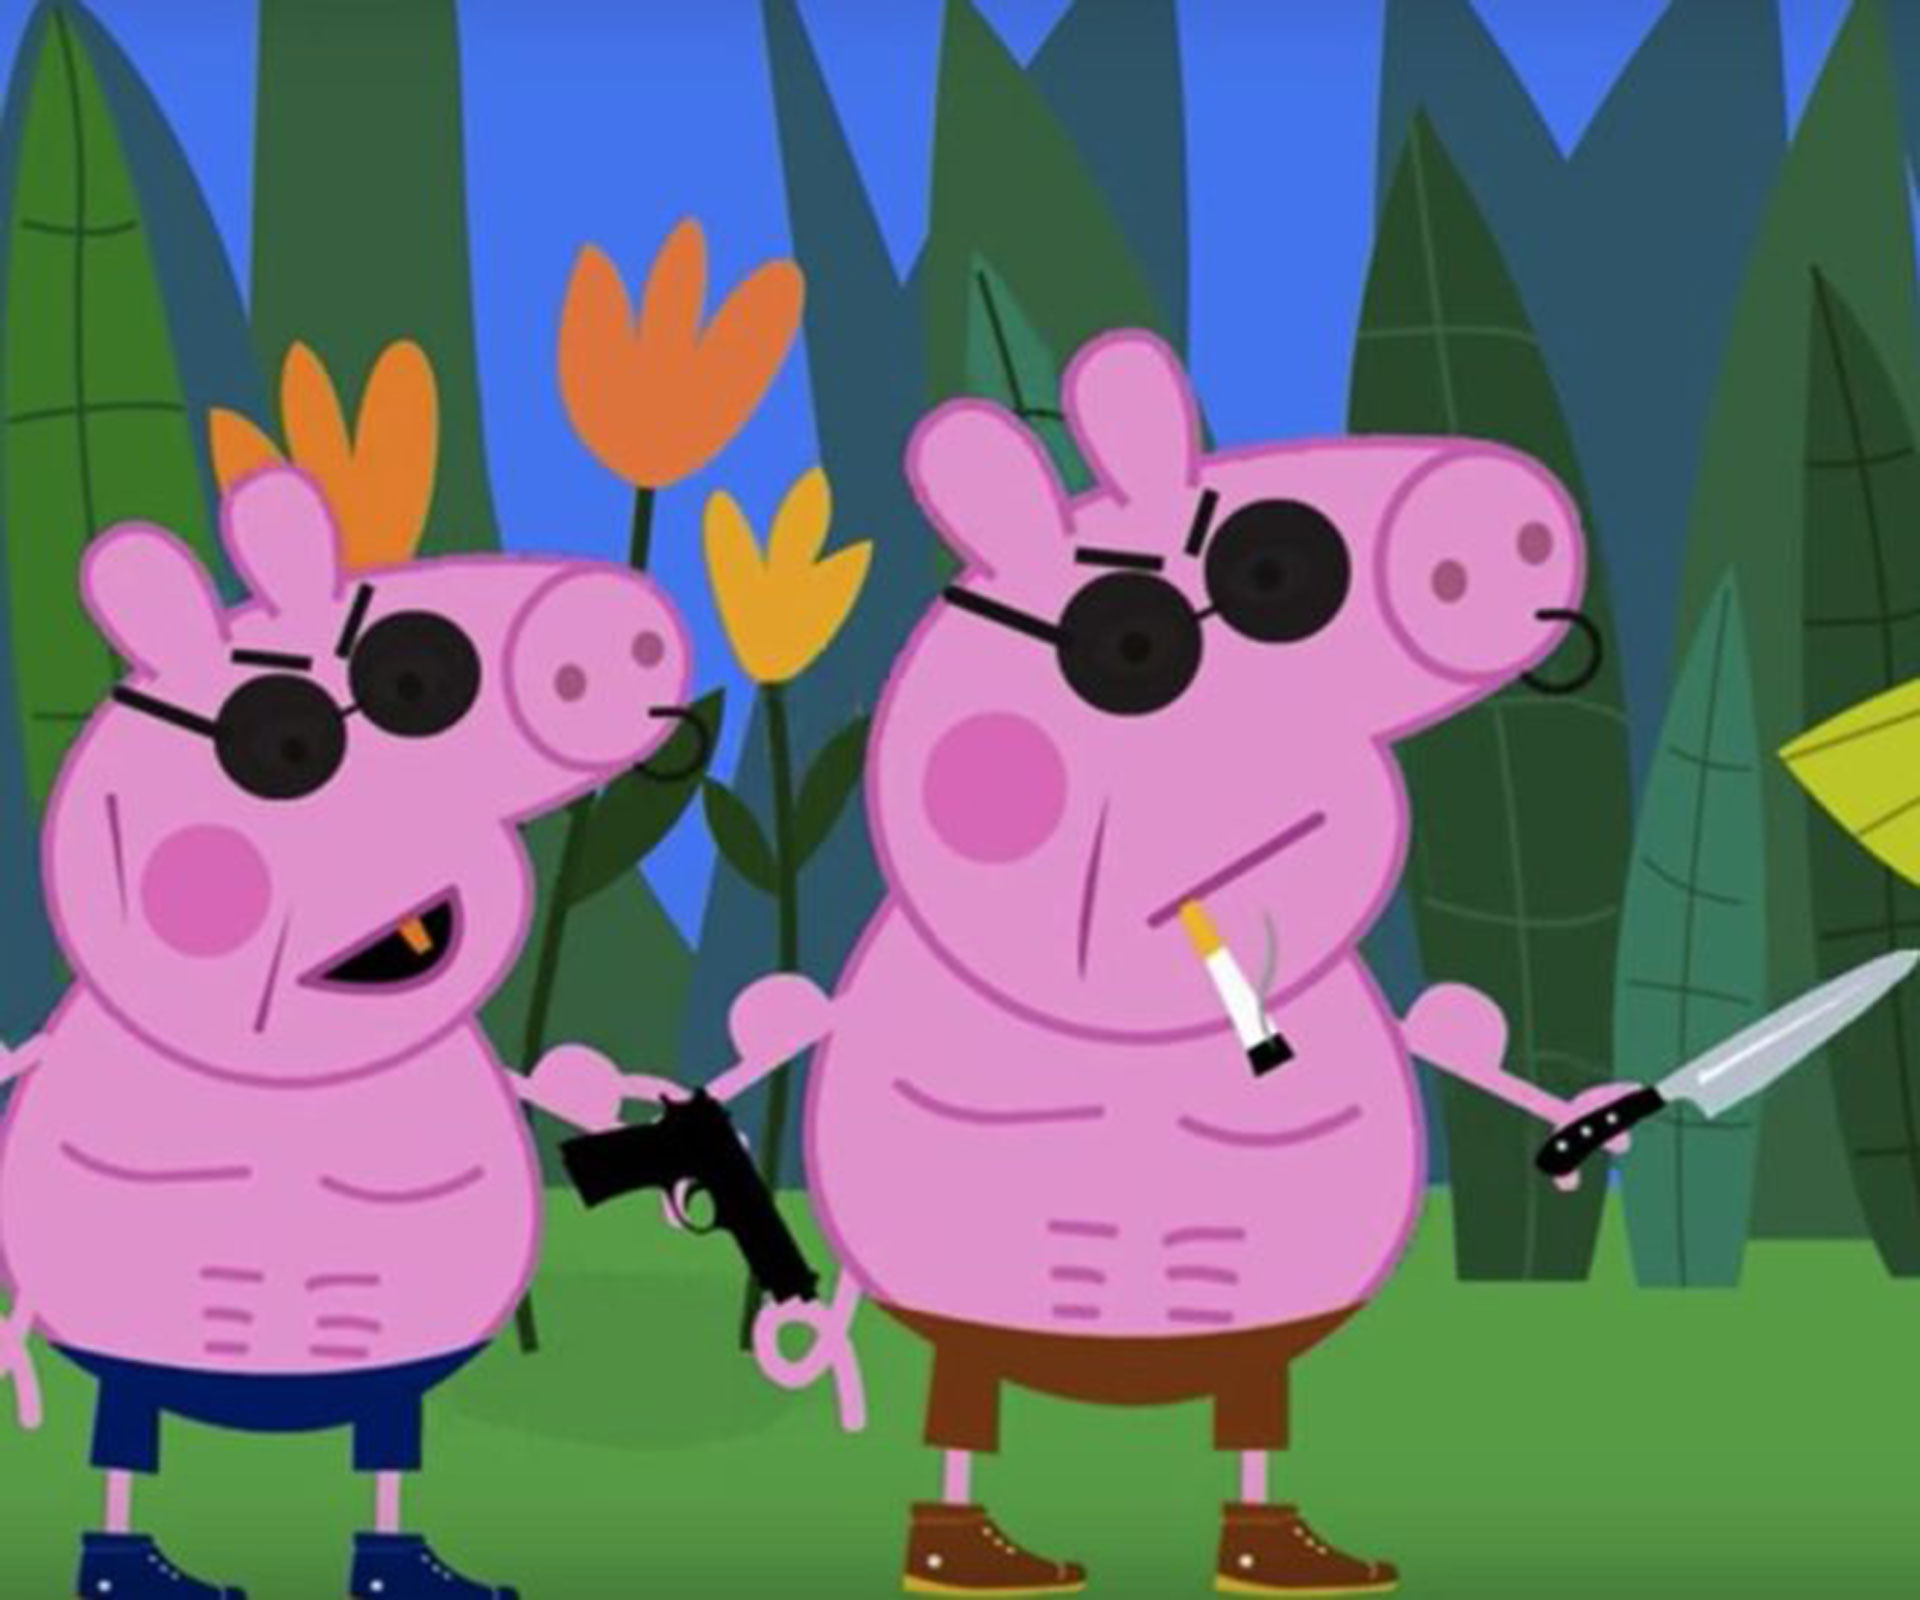 Kids traumatised by violent Peppa Pig clips